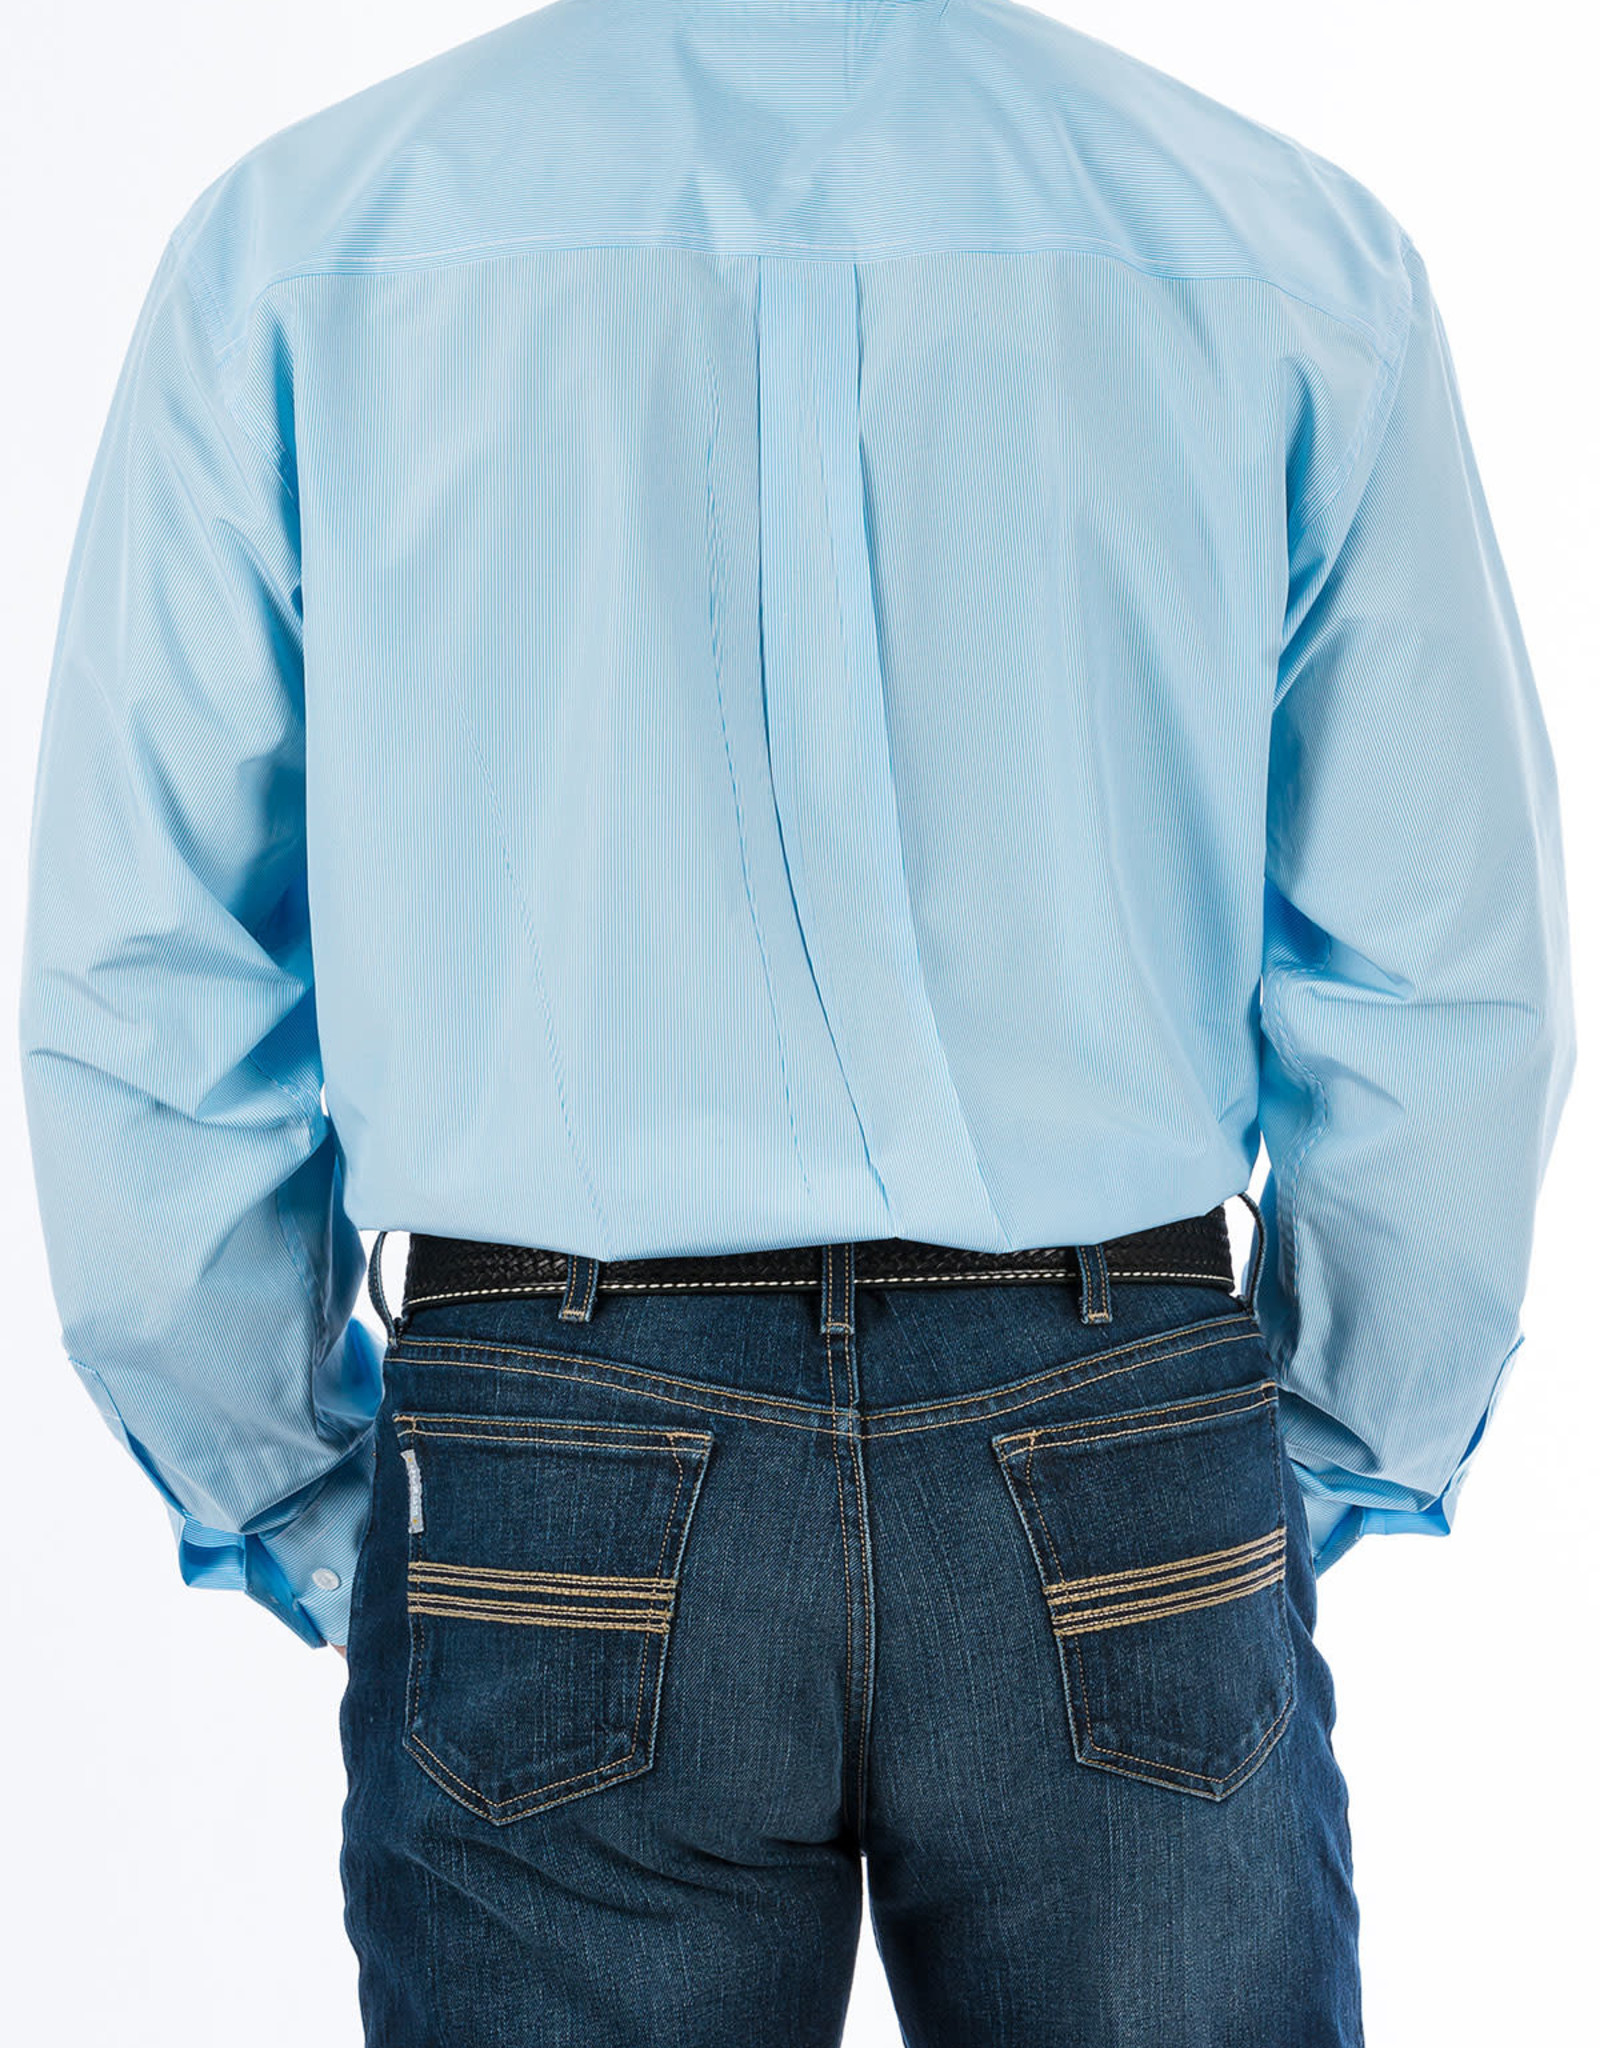 Cinch Cinch Long Sleeve Tencel Stipe Light Blue Western Button Down Shirt